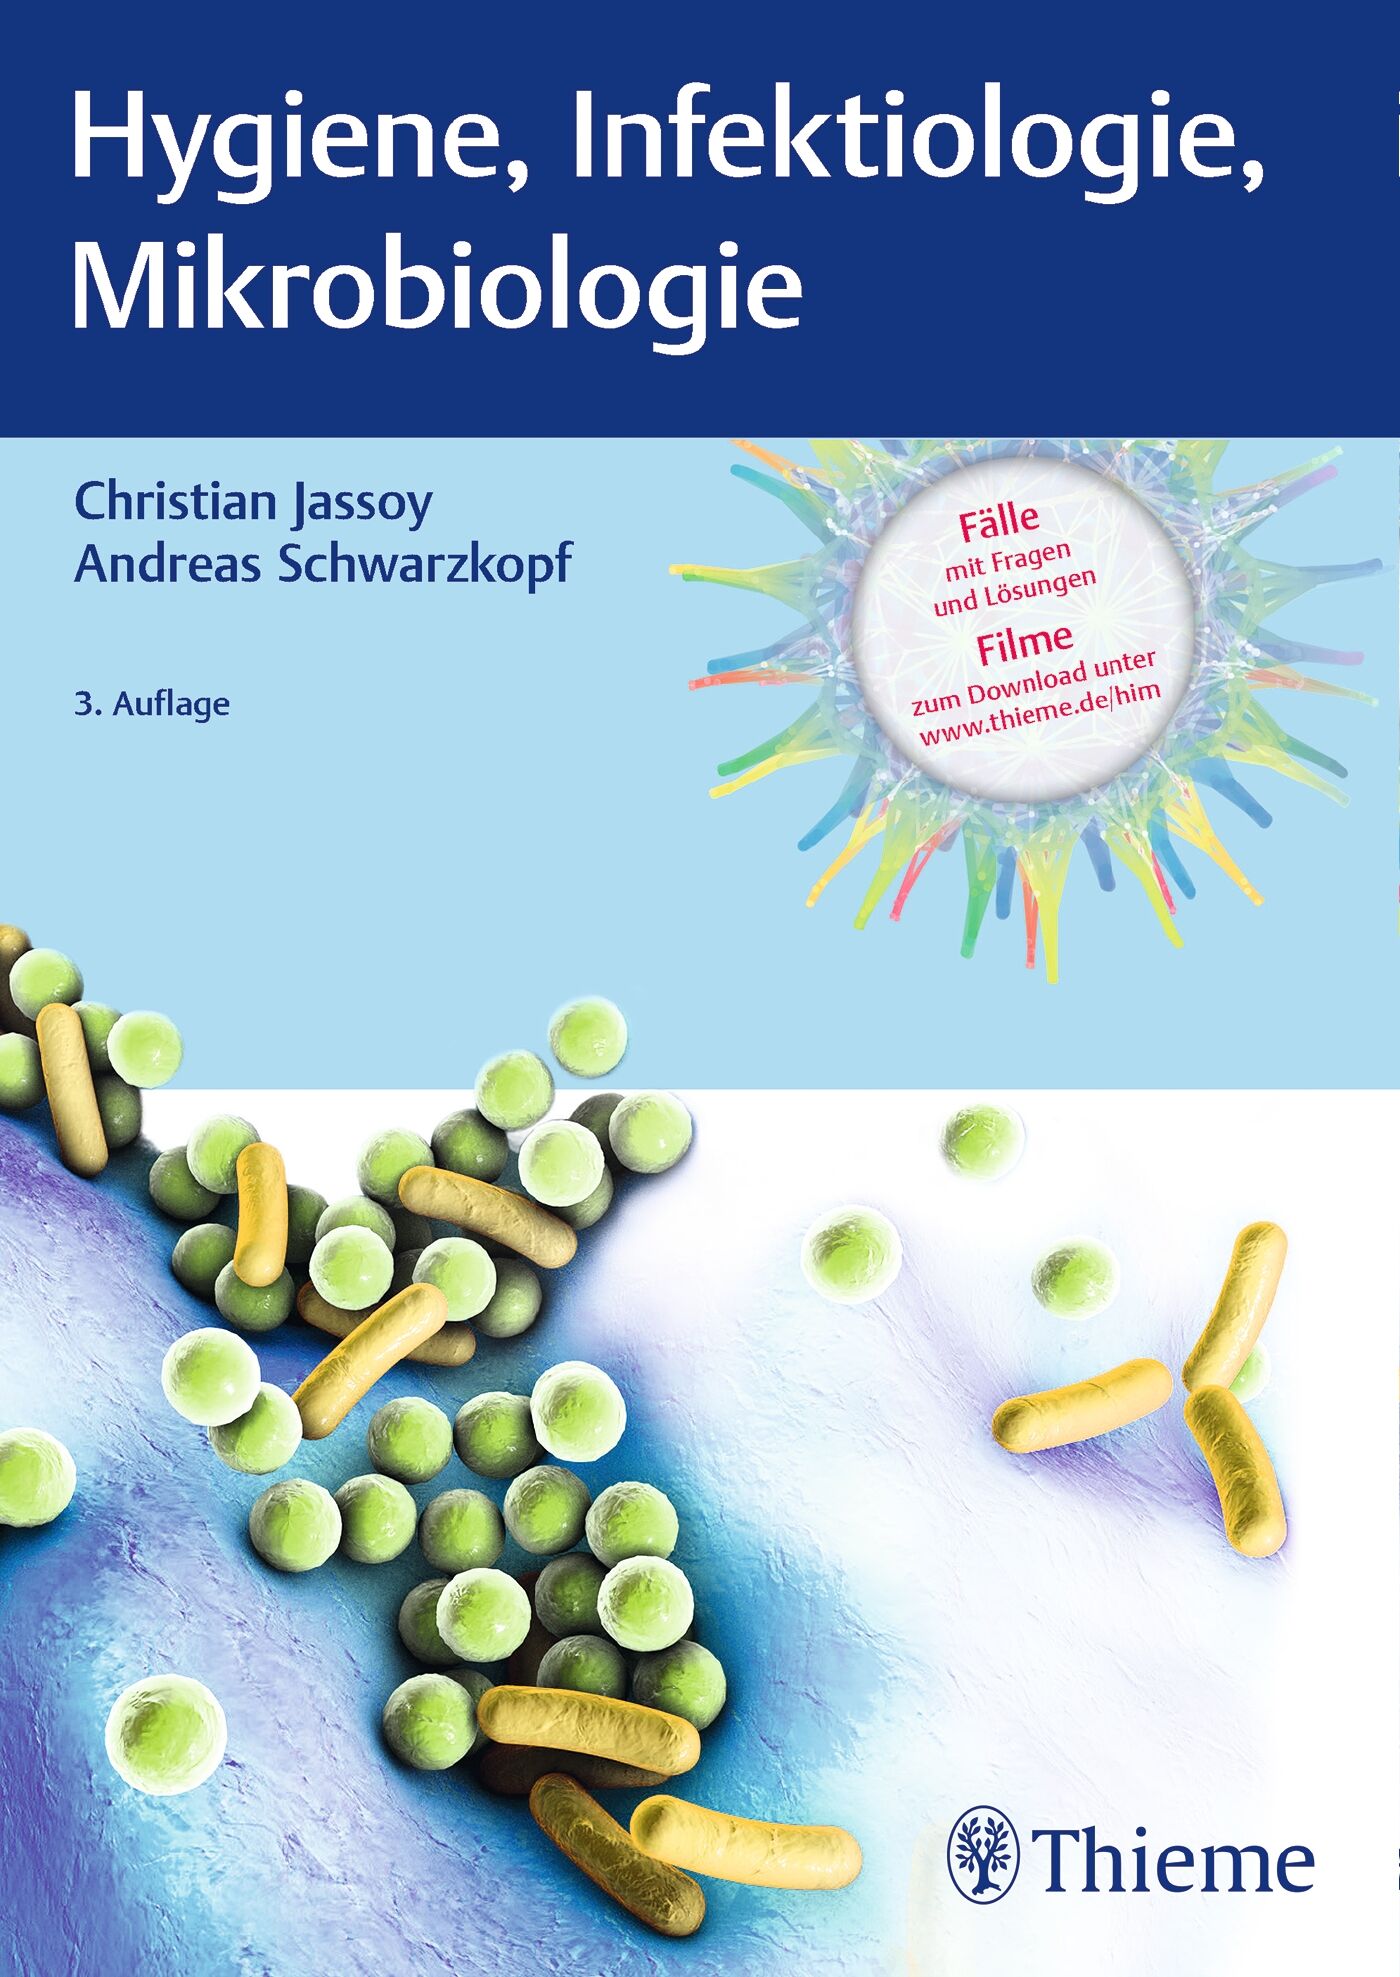 Hygiene, Infektiologie, Mikrobiologie, 9783132413689